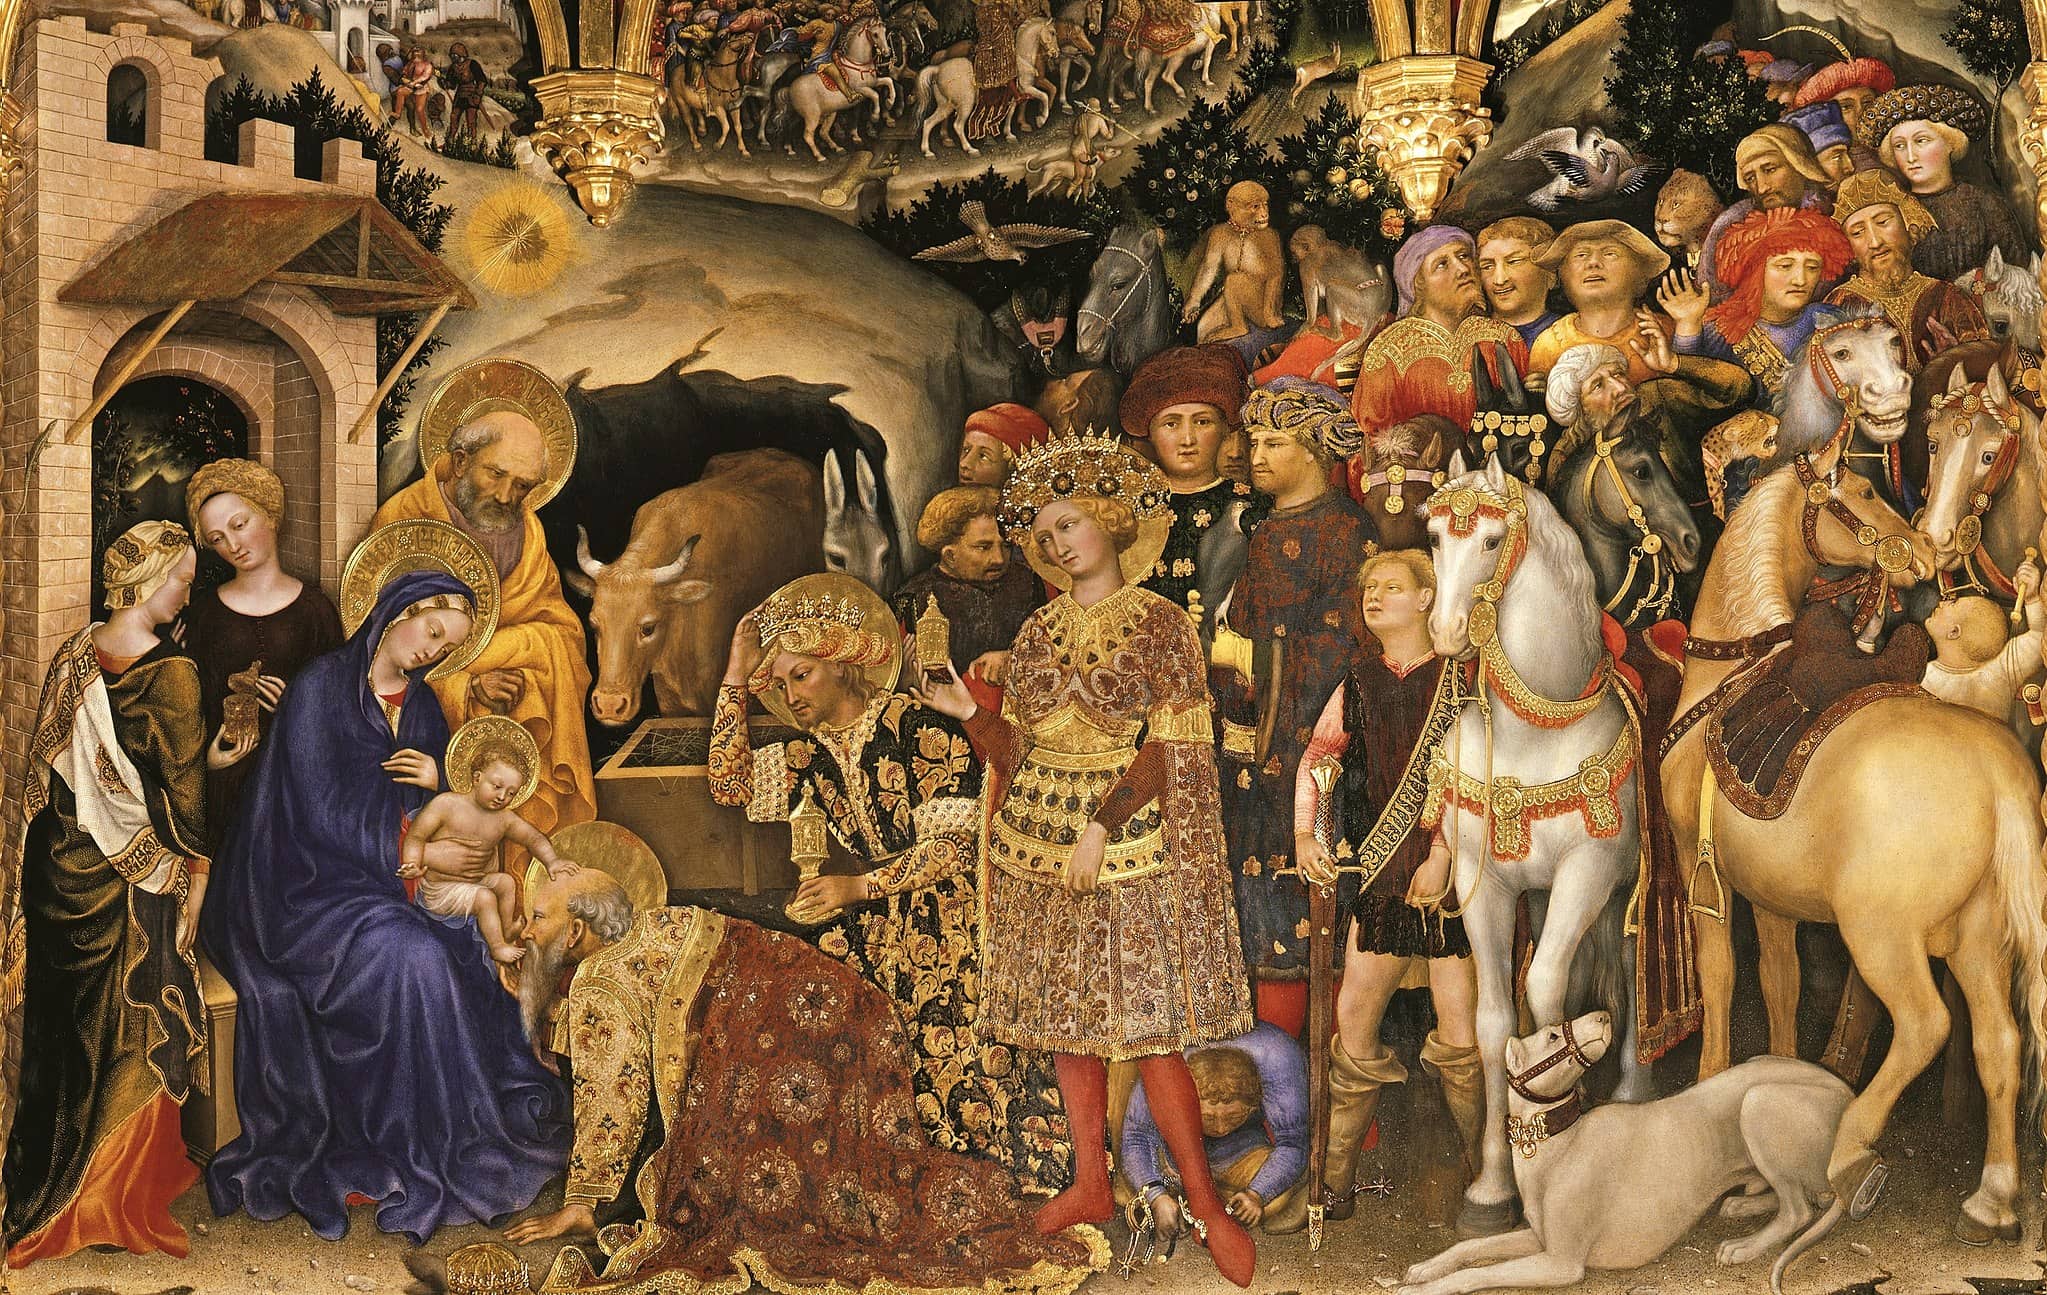 medieval art compared to renaissance art